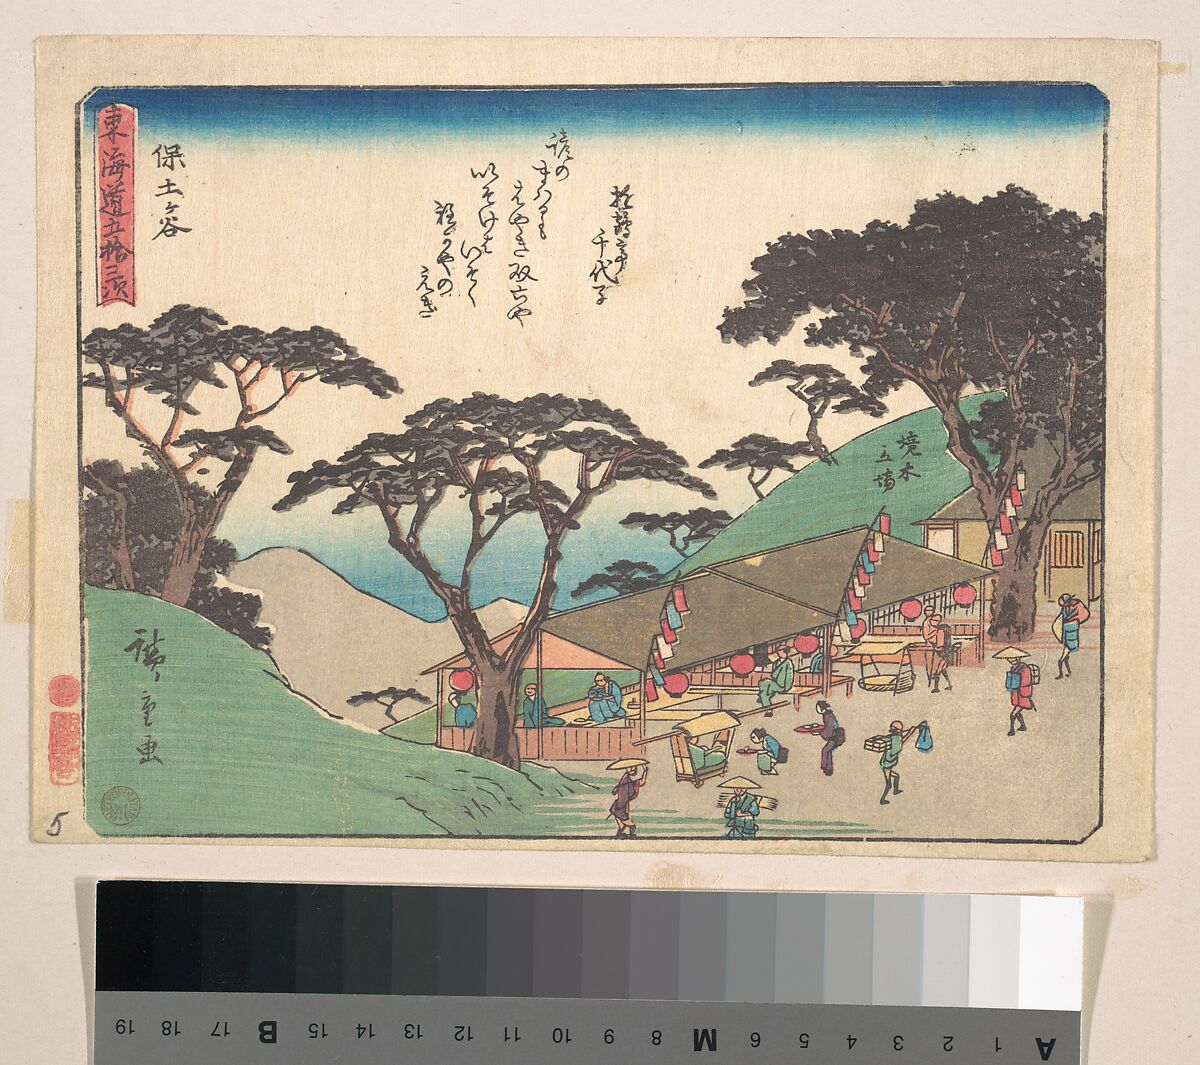 Hodogaya, Utagawa Hiroshige (Japanese, Tokyo (Edo) 1797–1858 Tokyo (Edo)), Woodblock print; ink and color on paper, Japan 